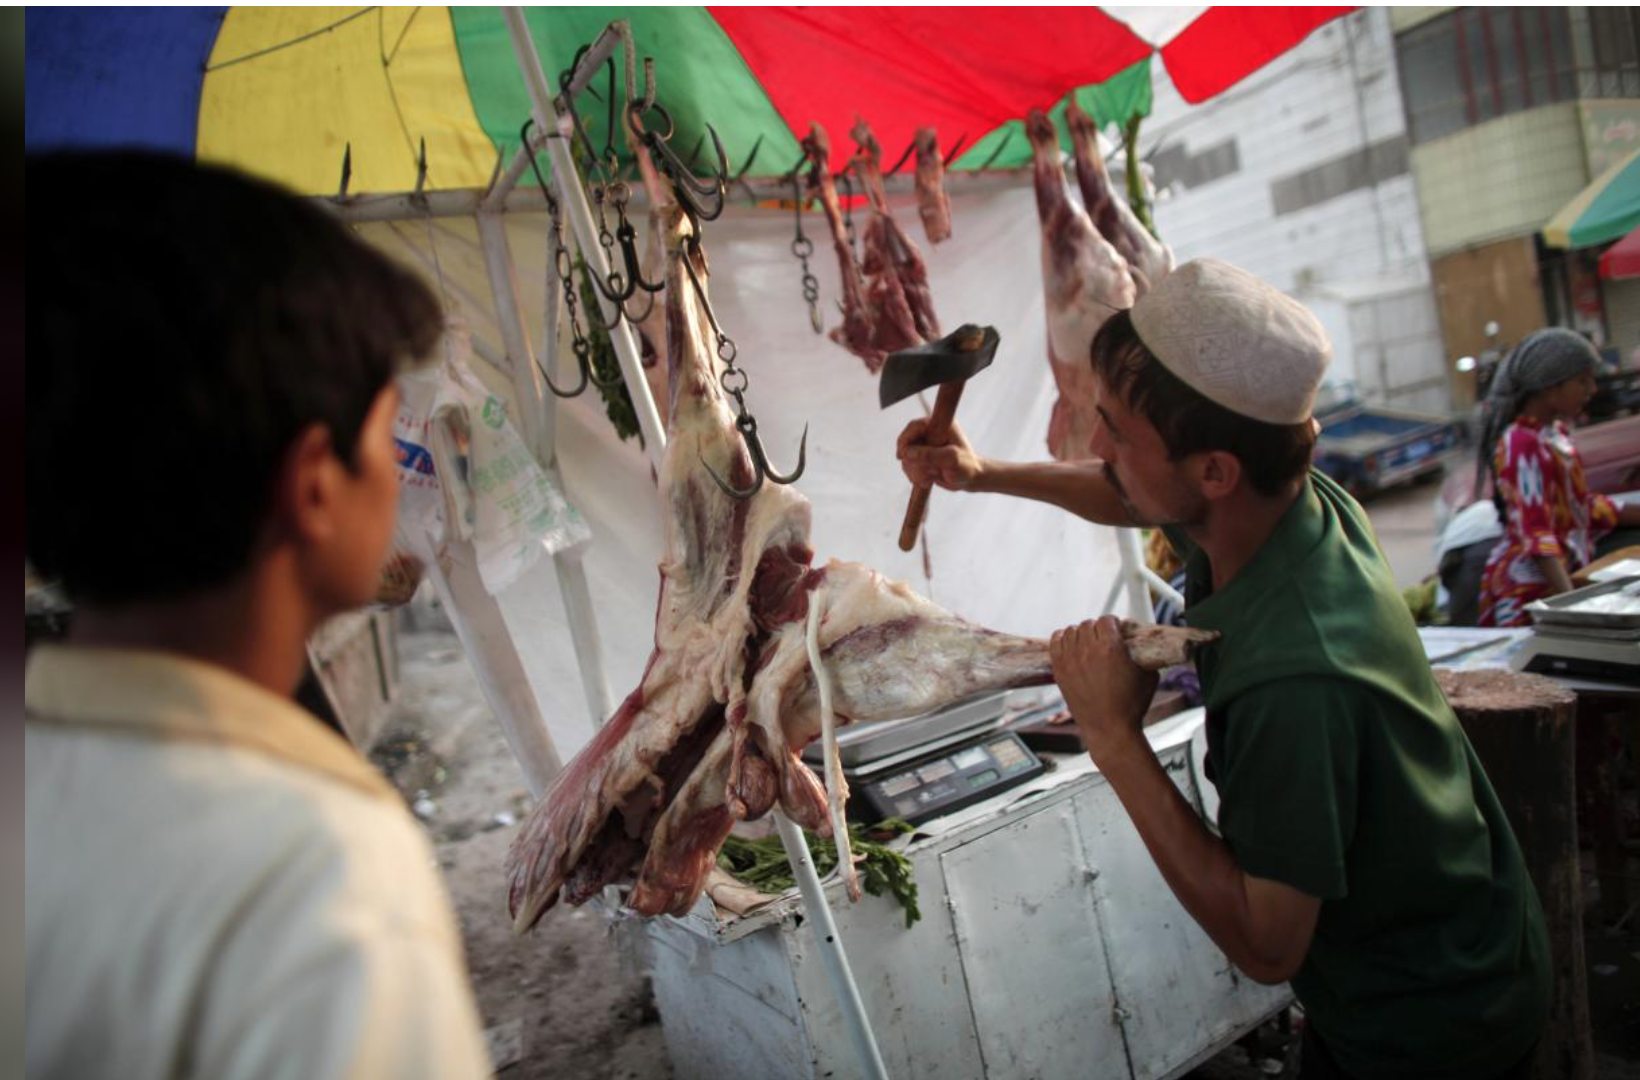 China launches anti-halal campaign in Xinjiang